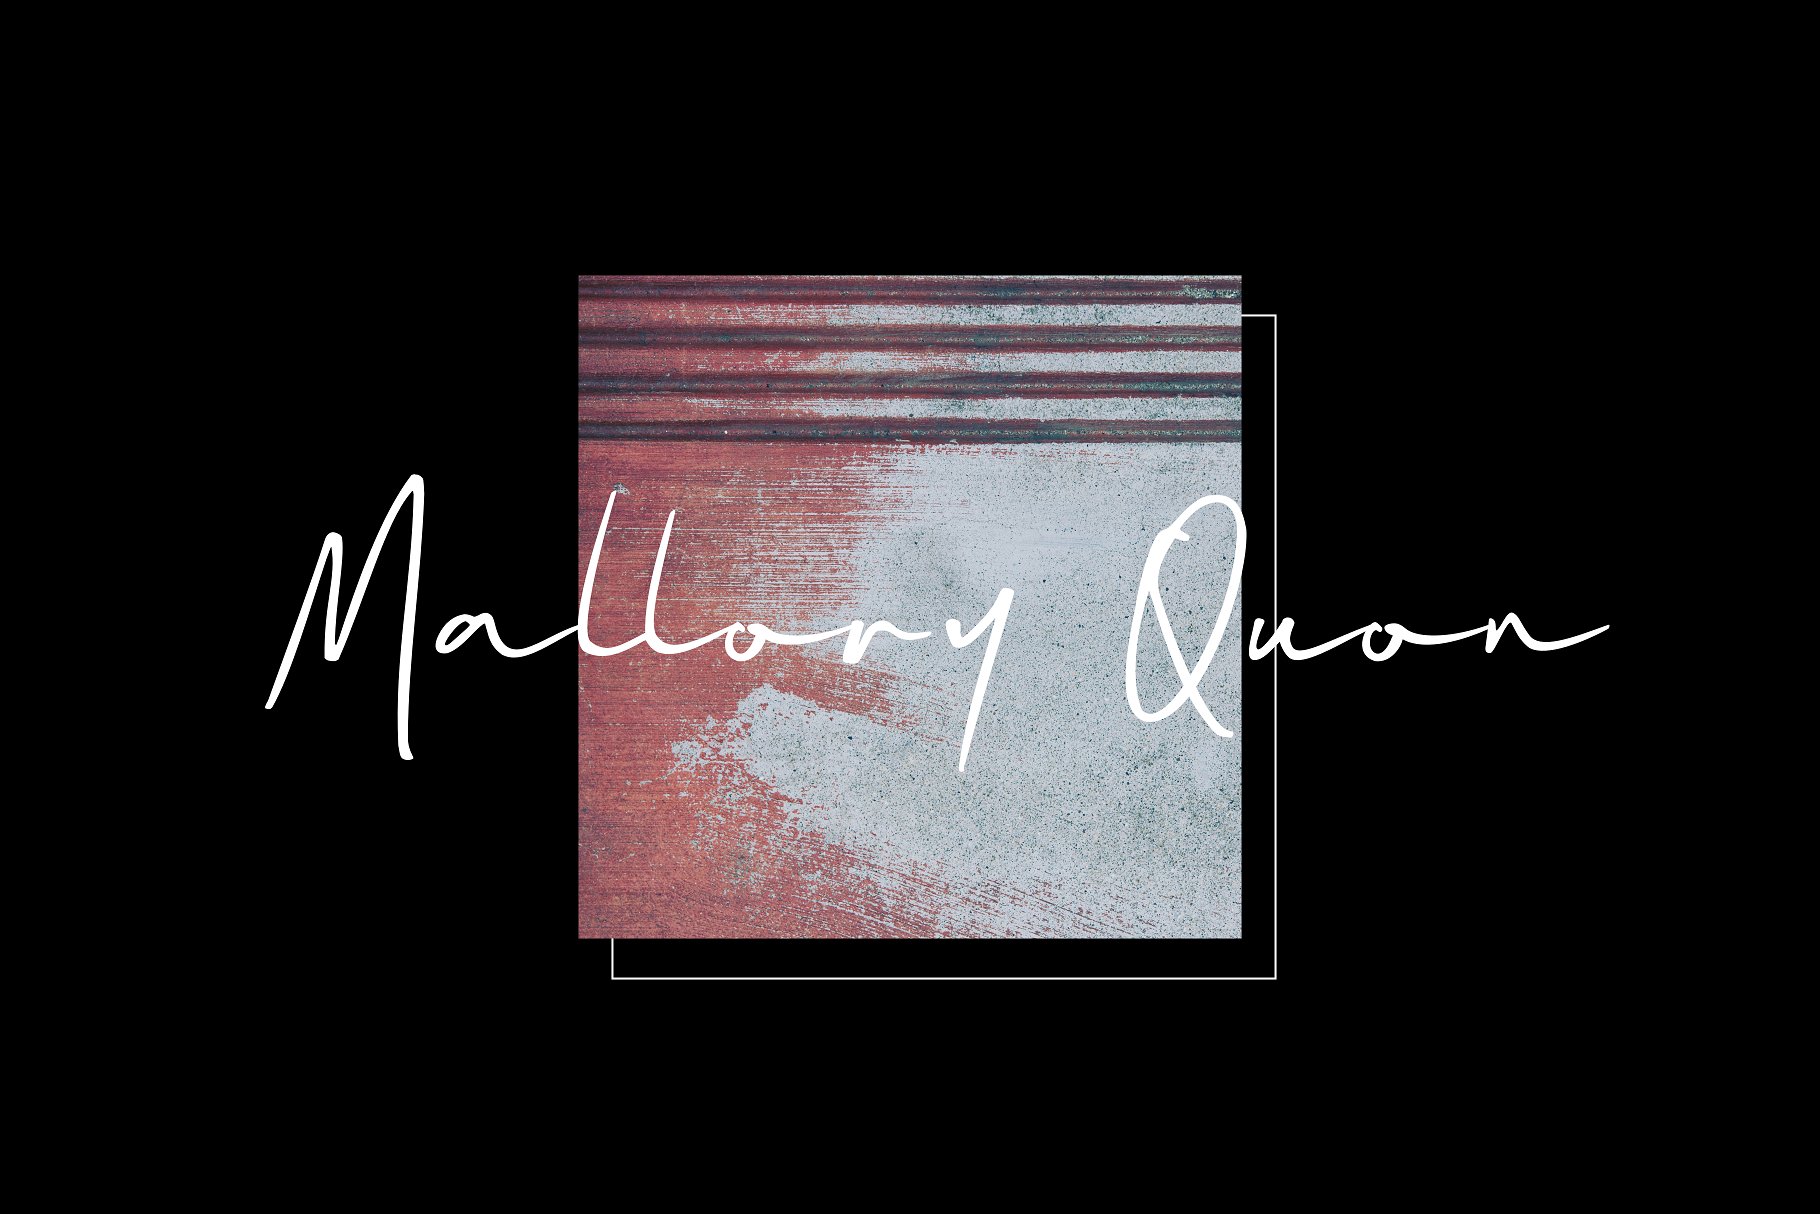 Mallory Quon